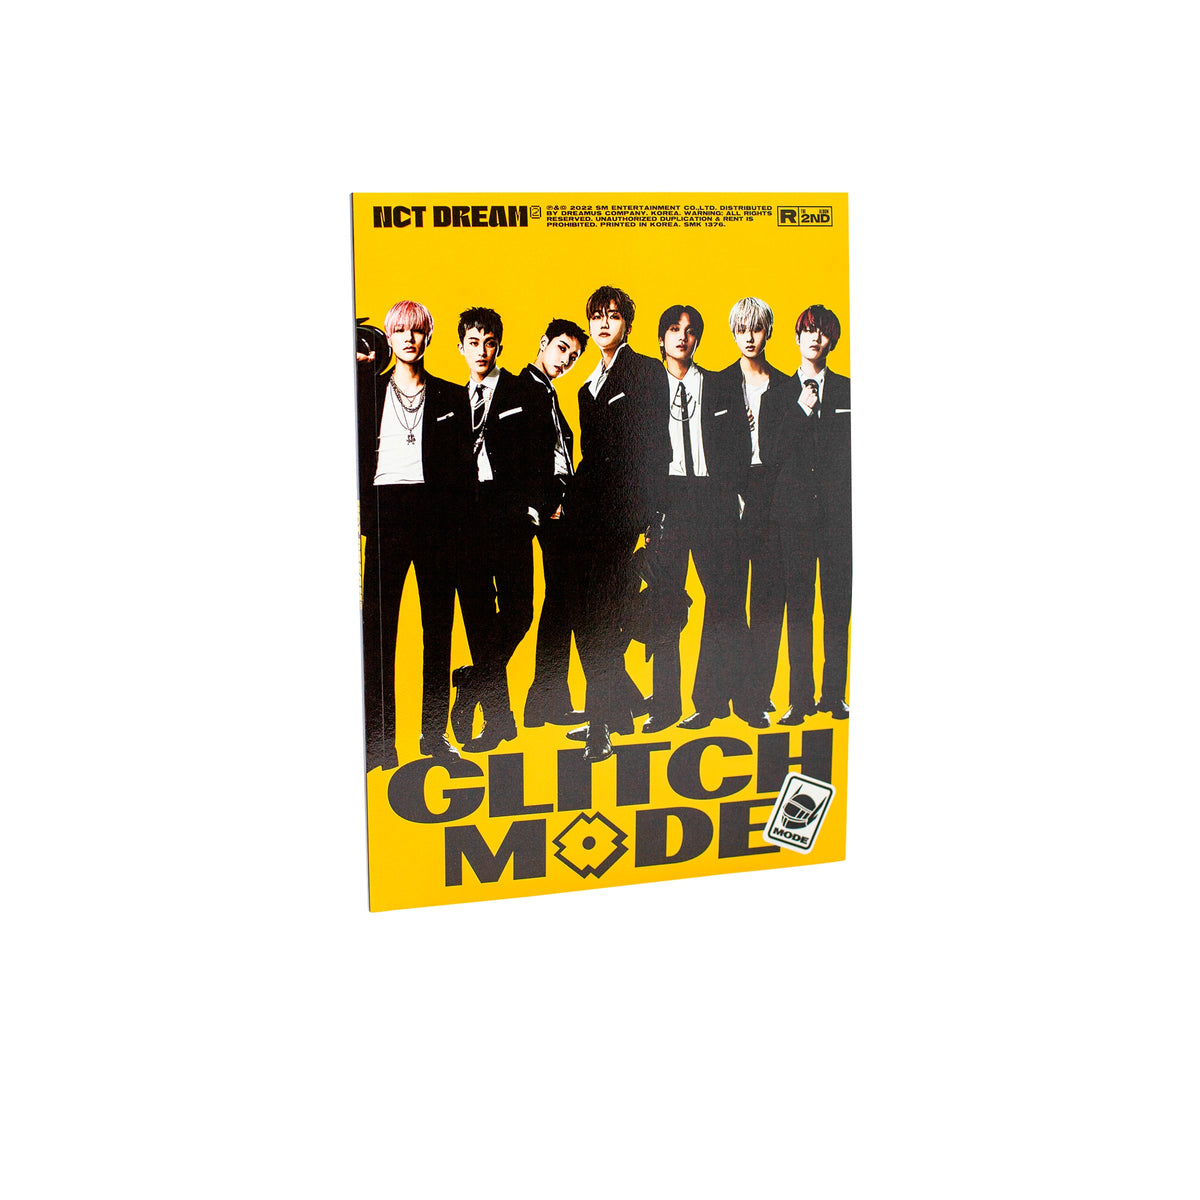 NCT DREAM - Glitch Mode 2nd Album - Photobook Version Scratch Ver main image